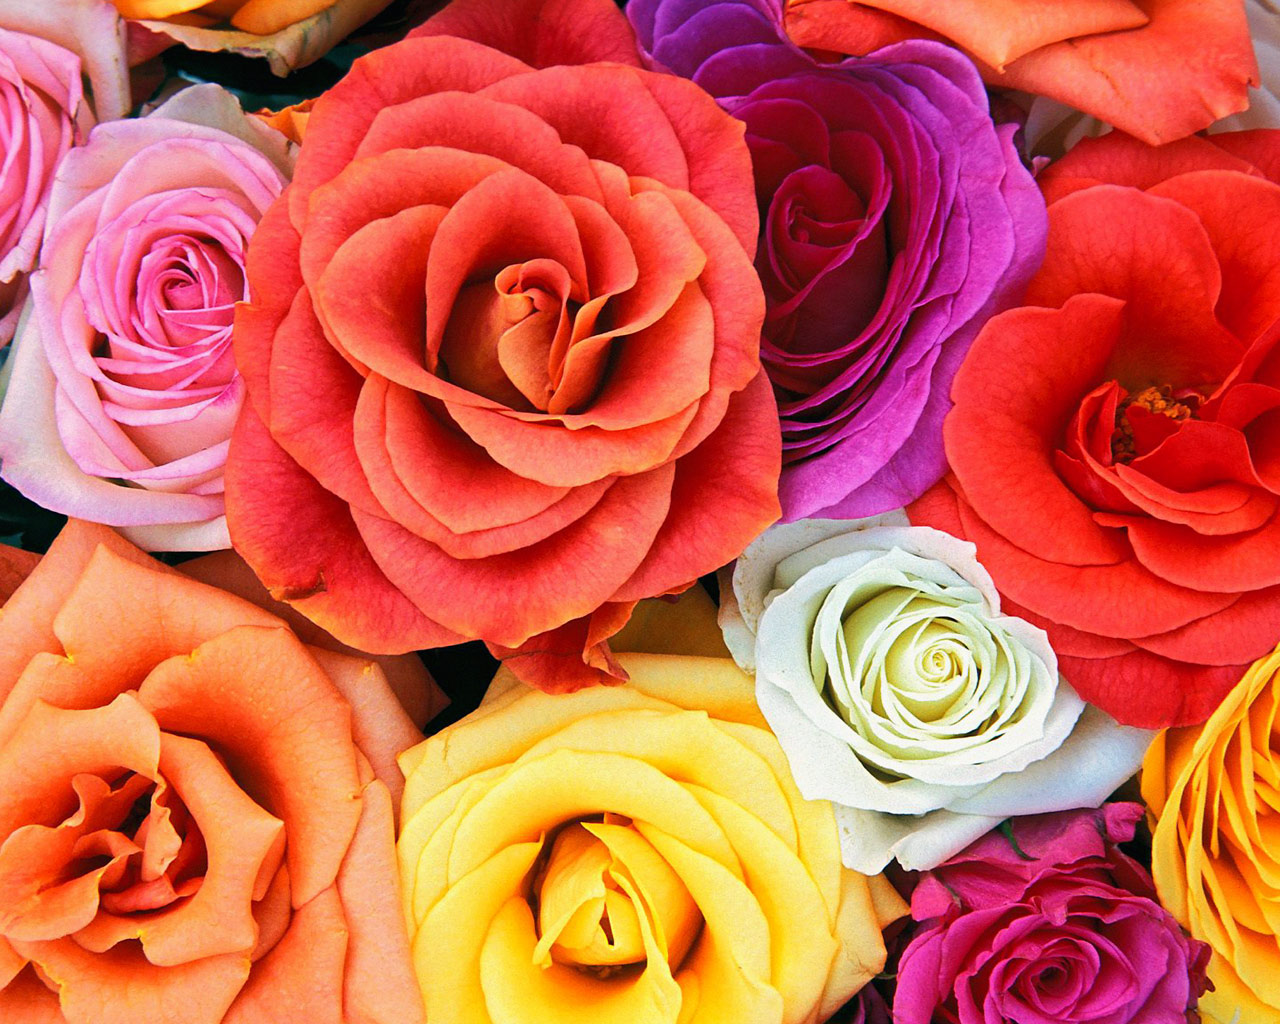 types of flowers jasmine Desktop Backgrounds Flowers Roses | 1280 x 1024